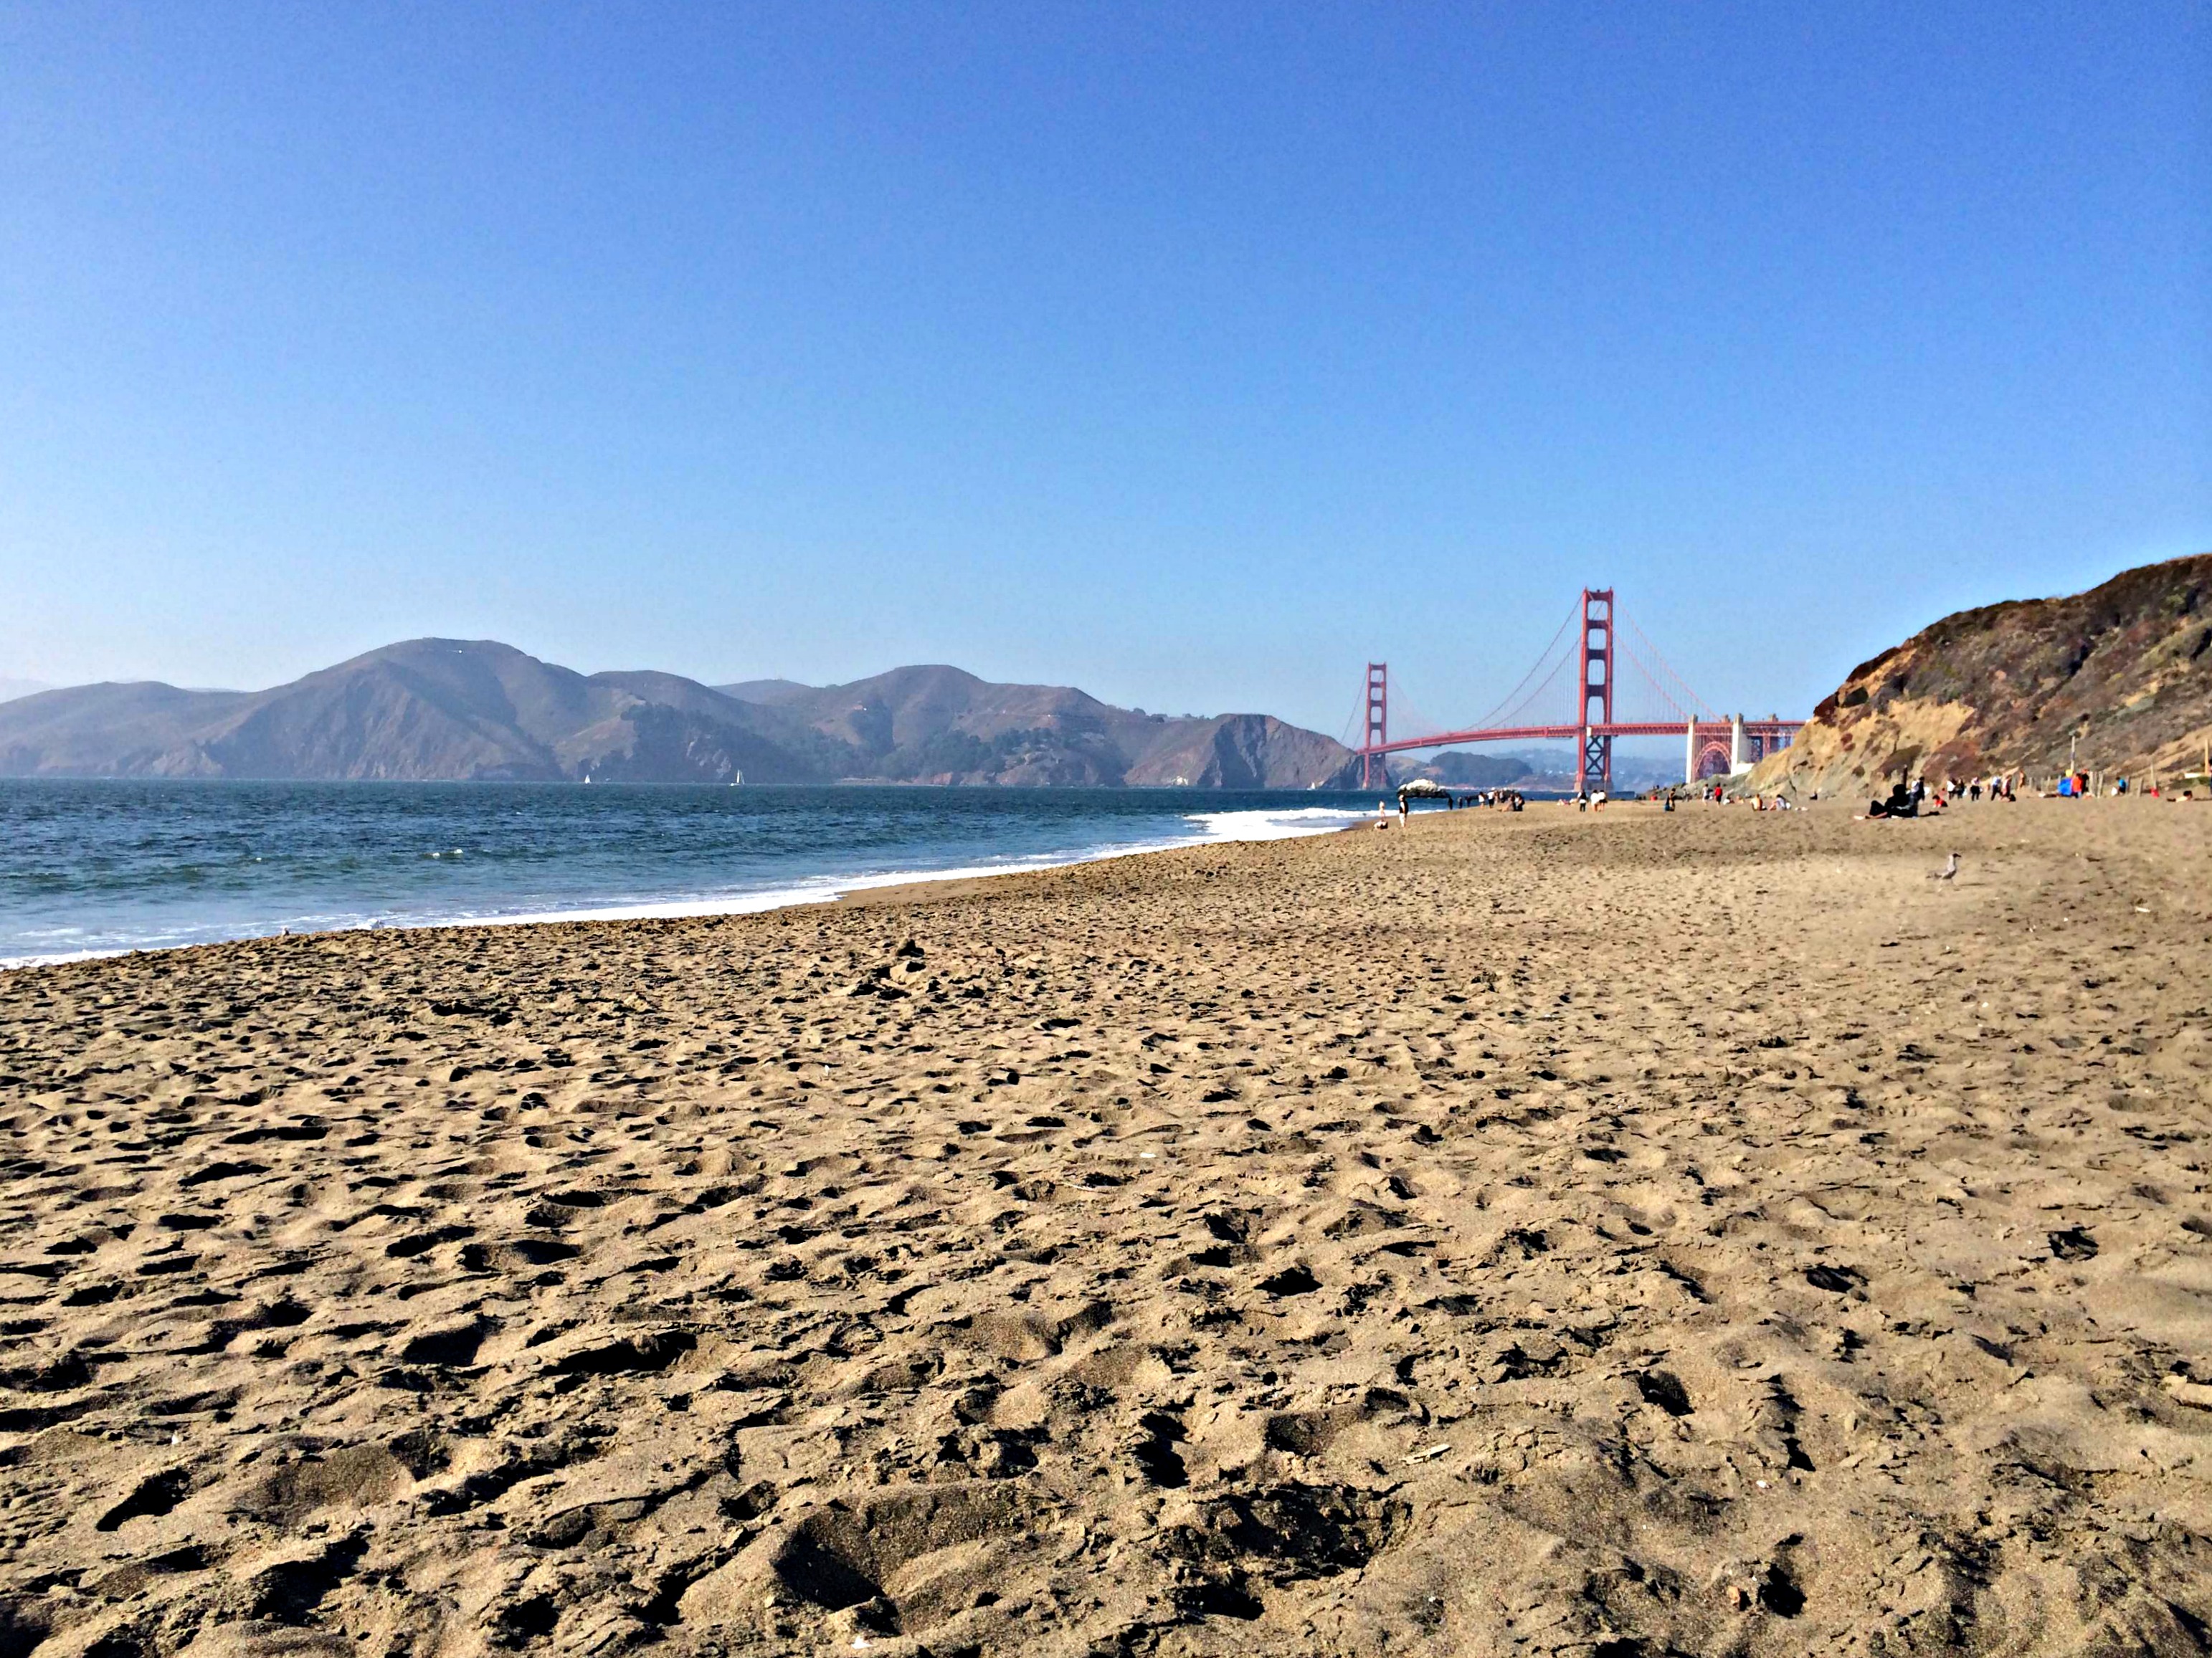 Baker Beach and San Francisco's Golden Gate Bridge.